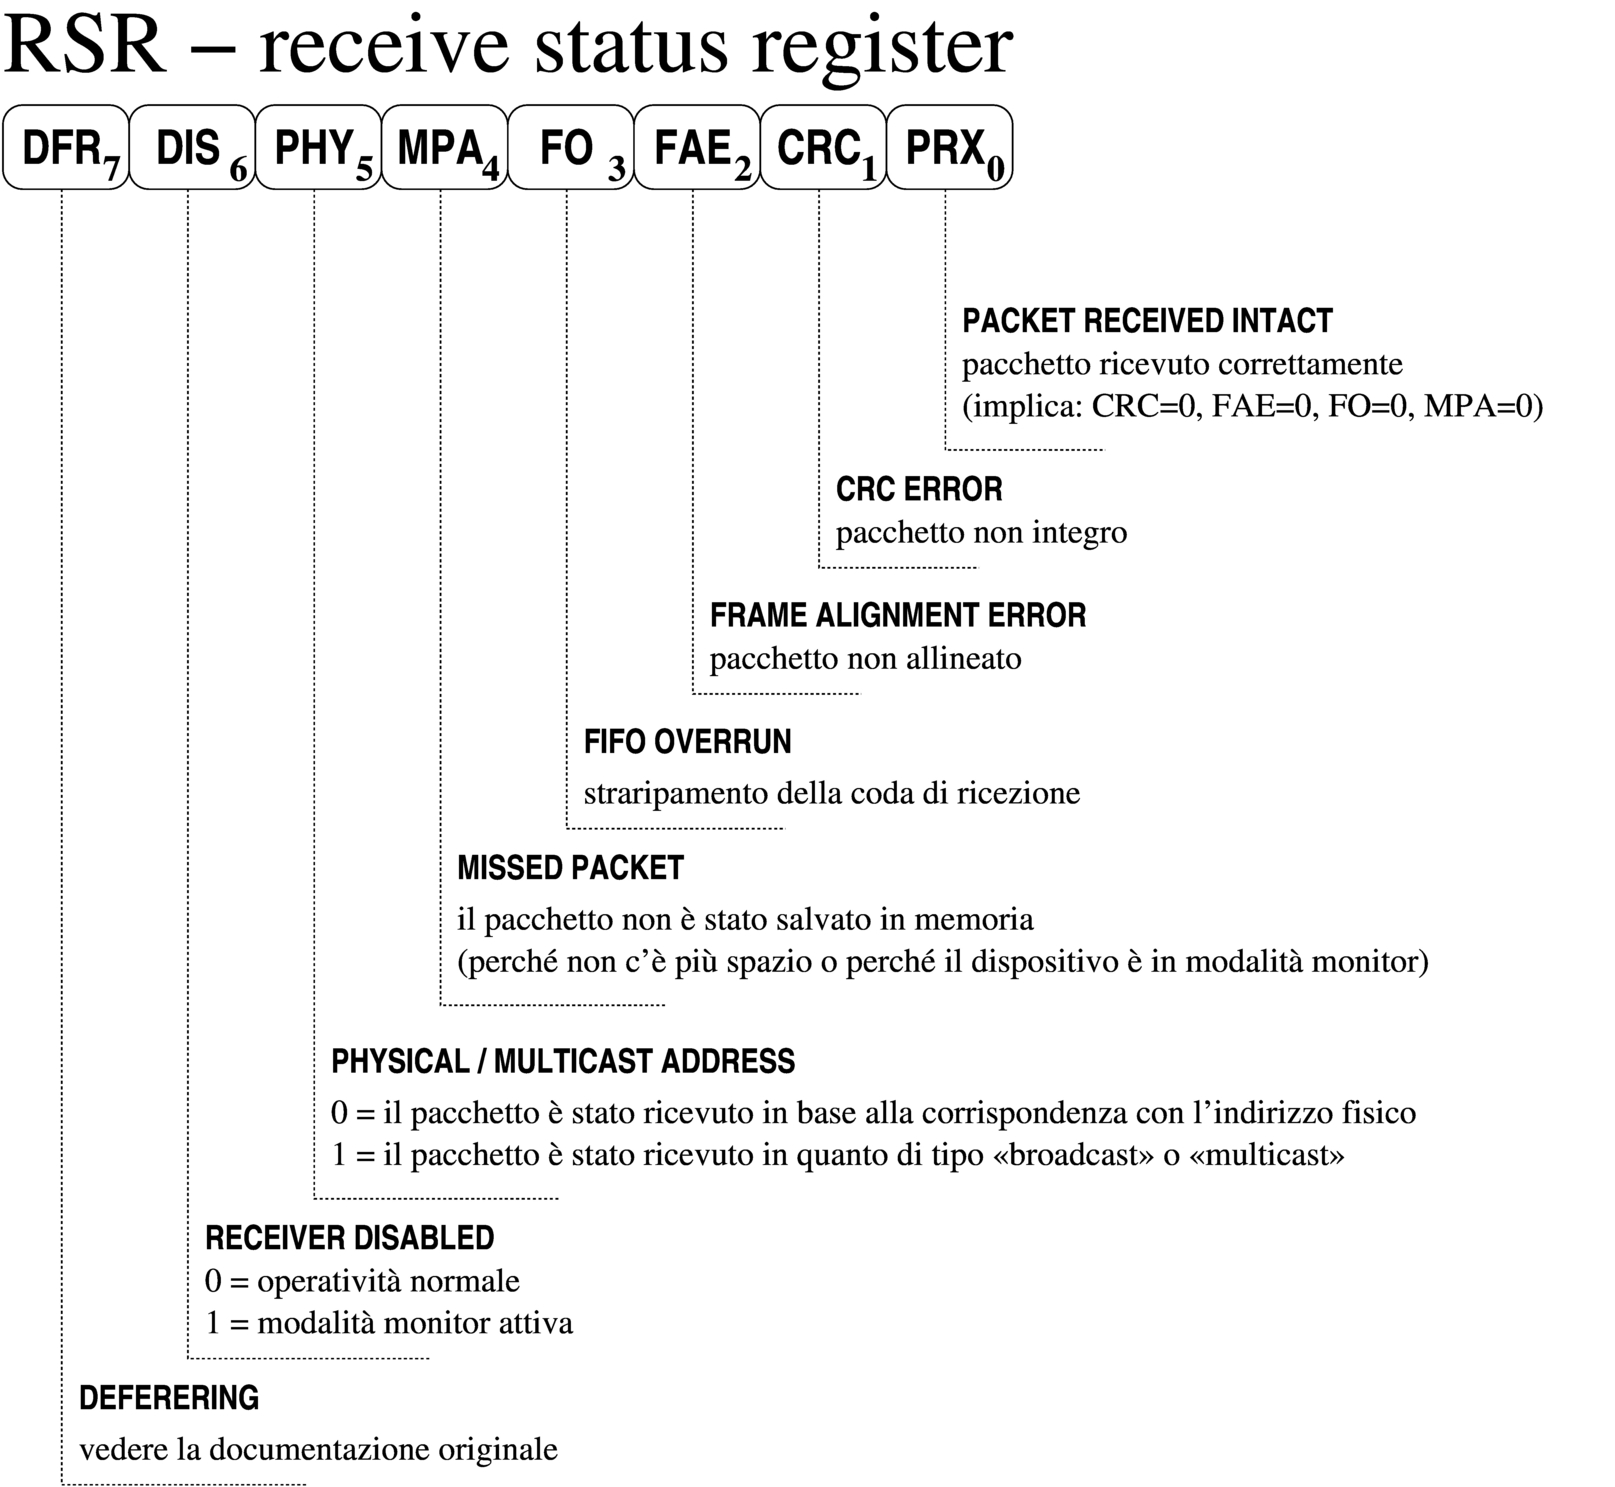 NE2000: rsr, receive status register